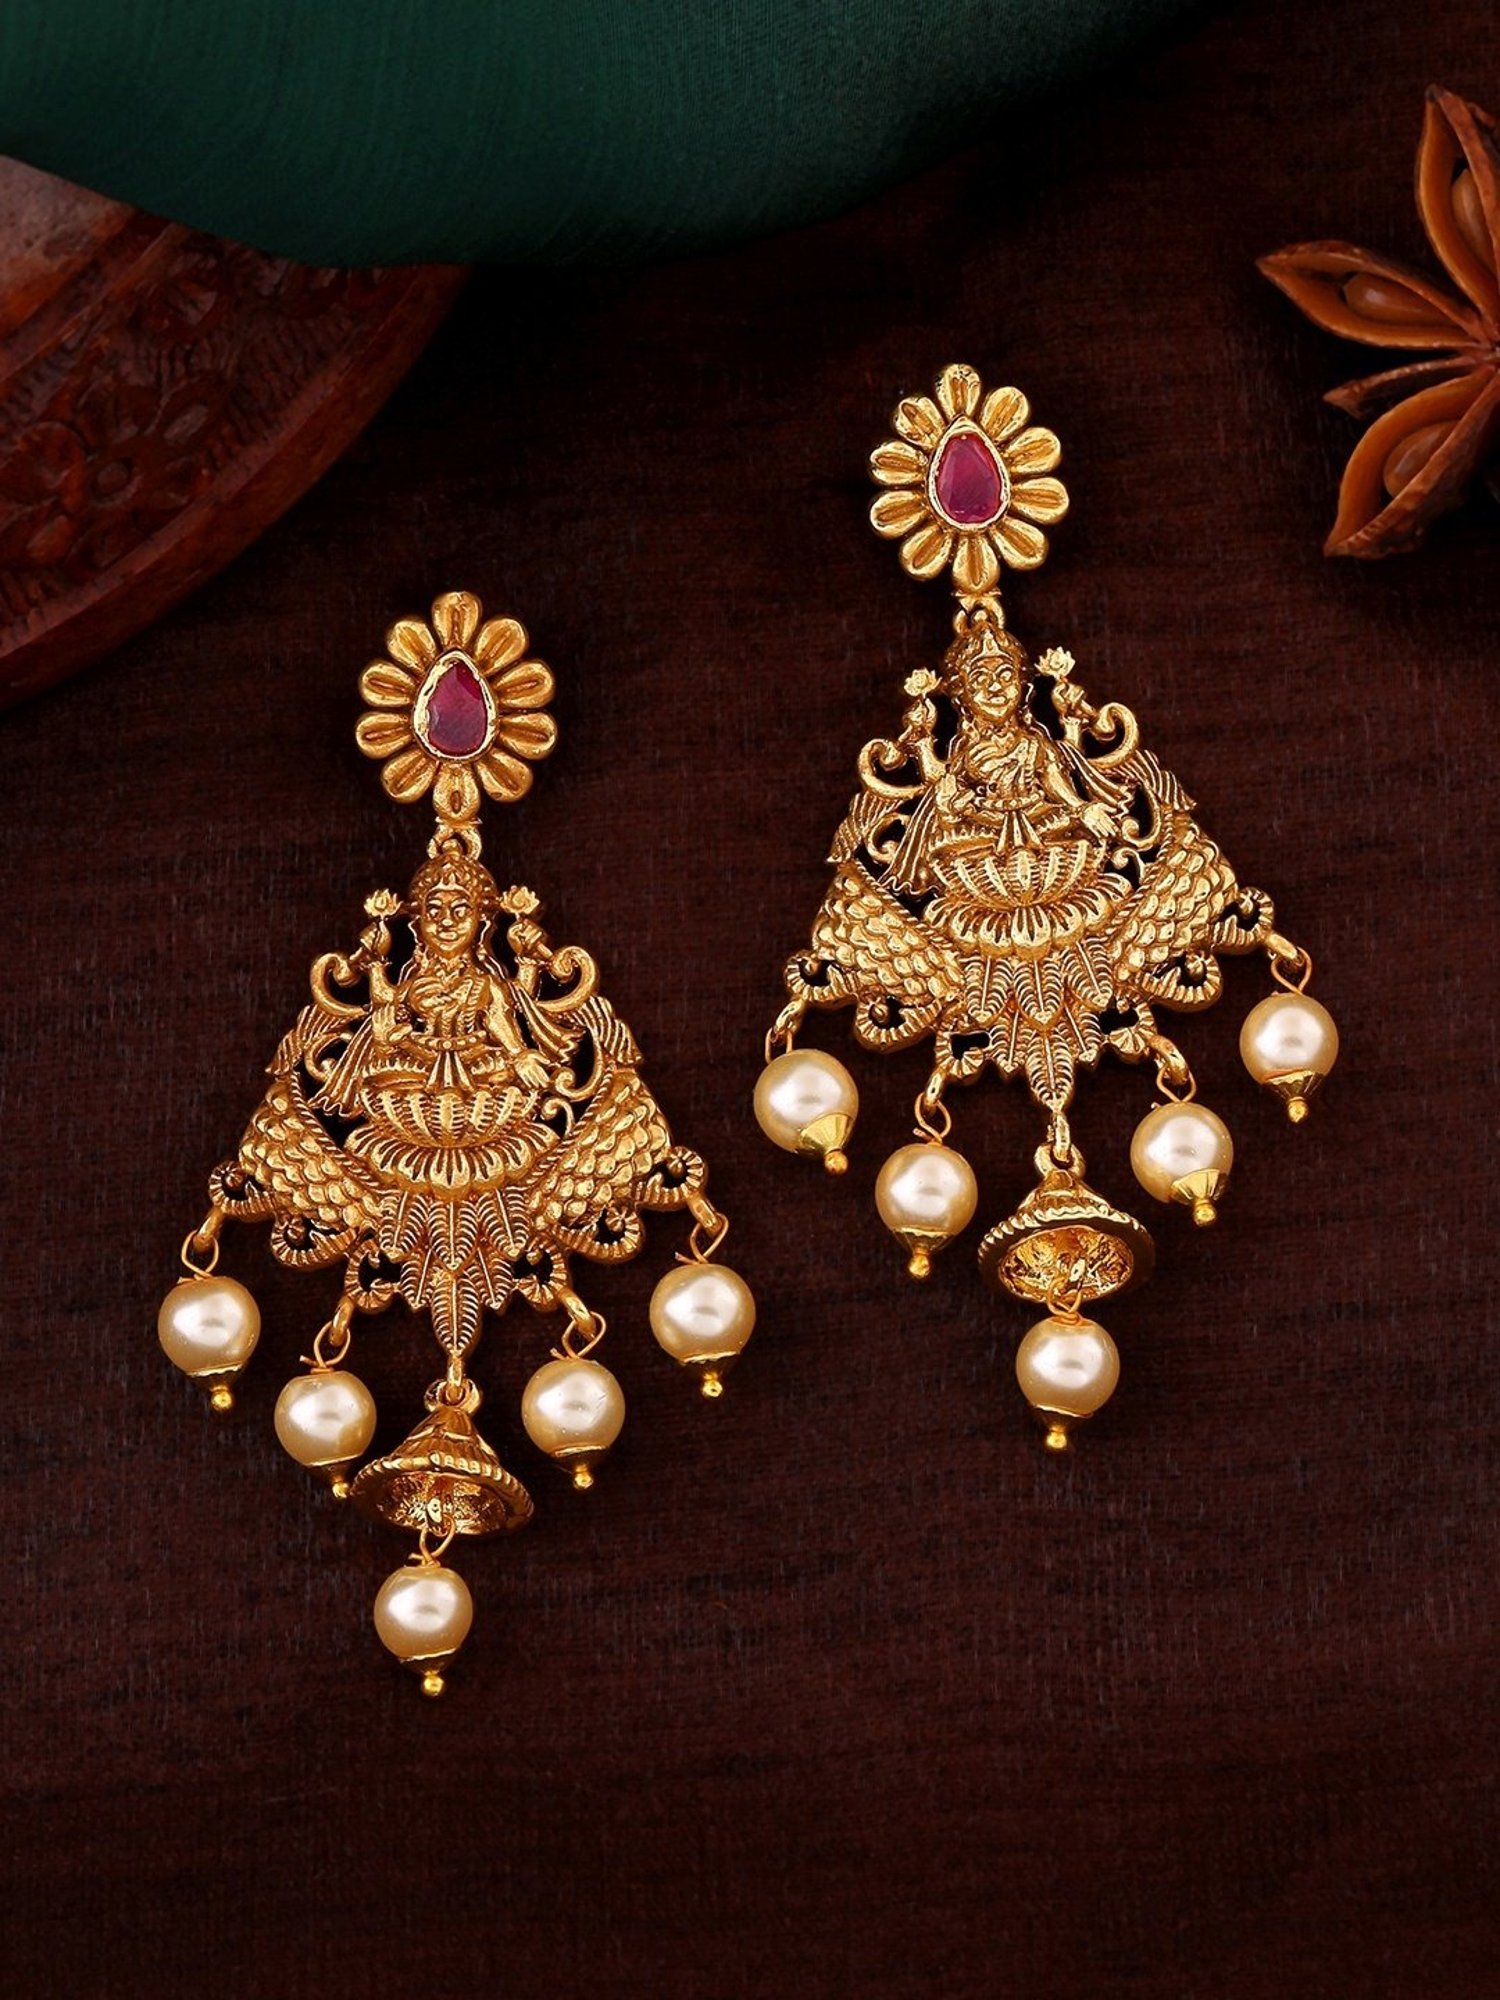 Imitation jewellery manufacturers in India, USA, UK